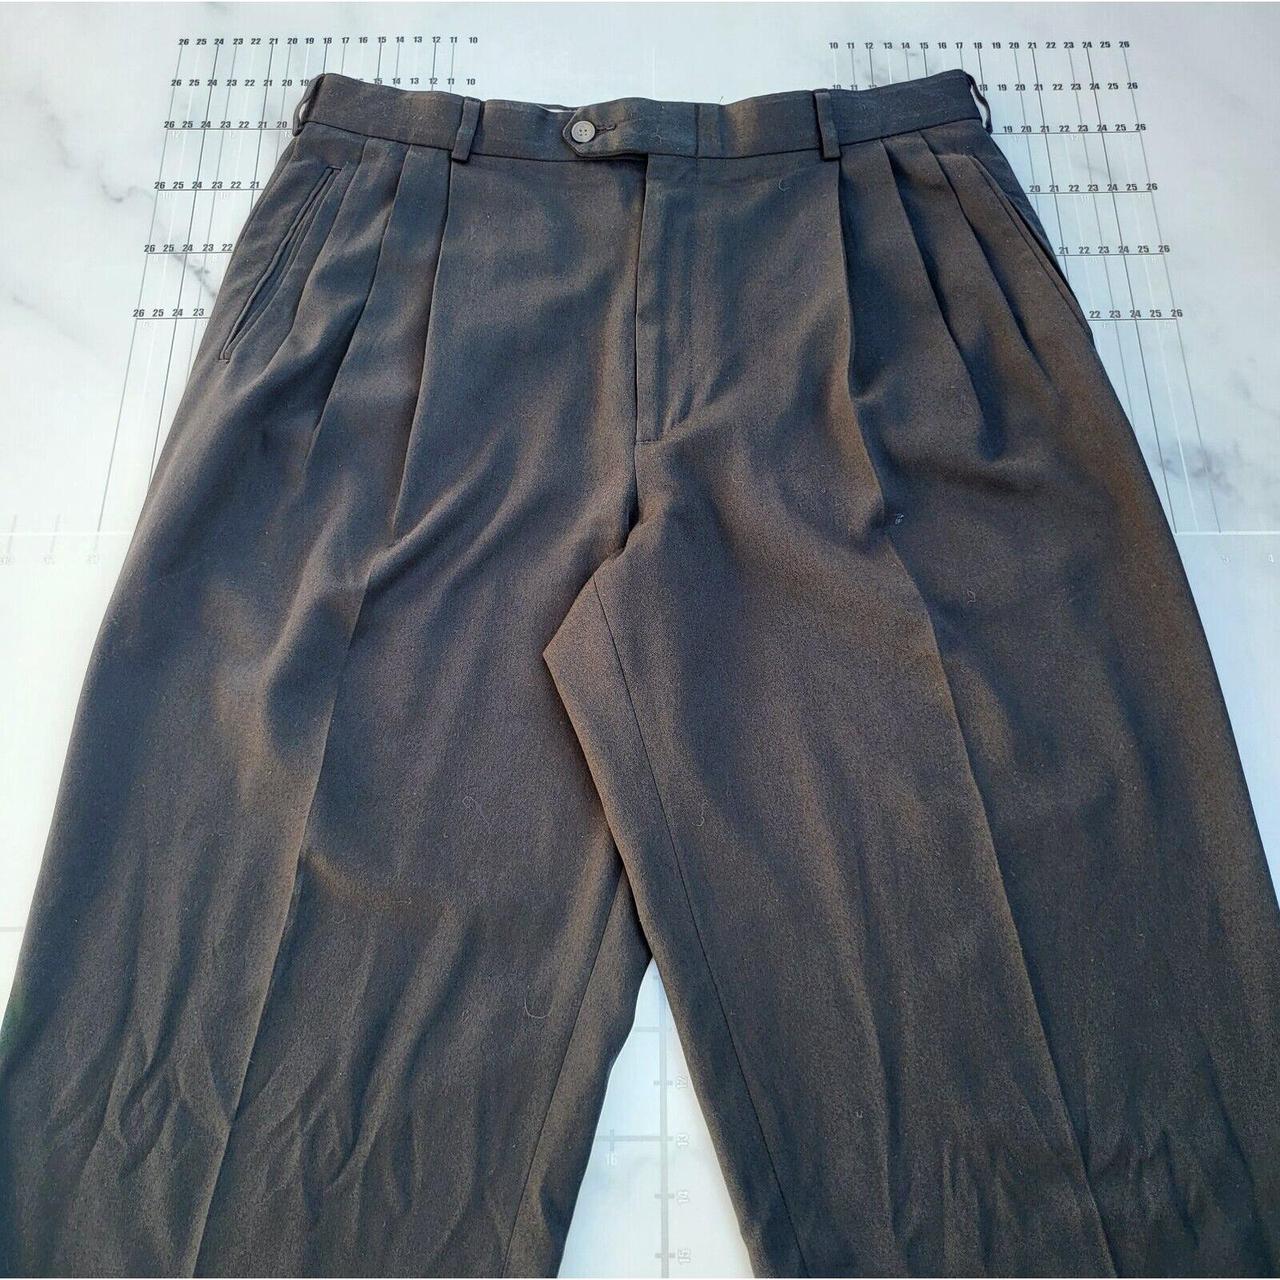 Vintage Slates Pants Size 33x33 Black Dress Pleated... - Depop